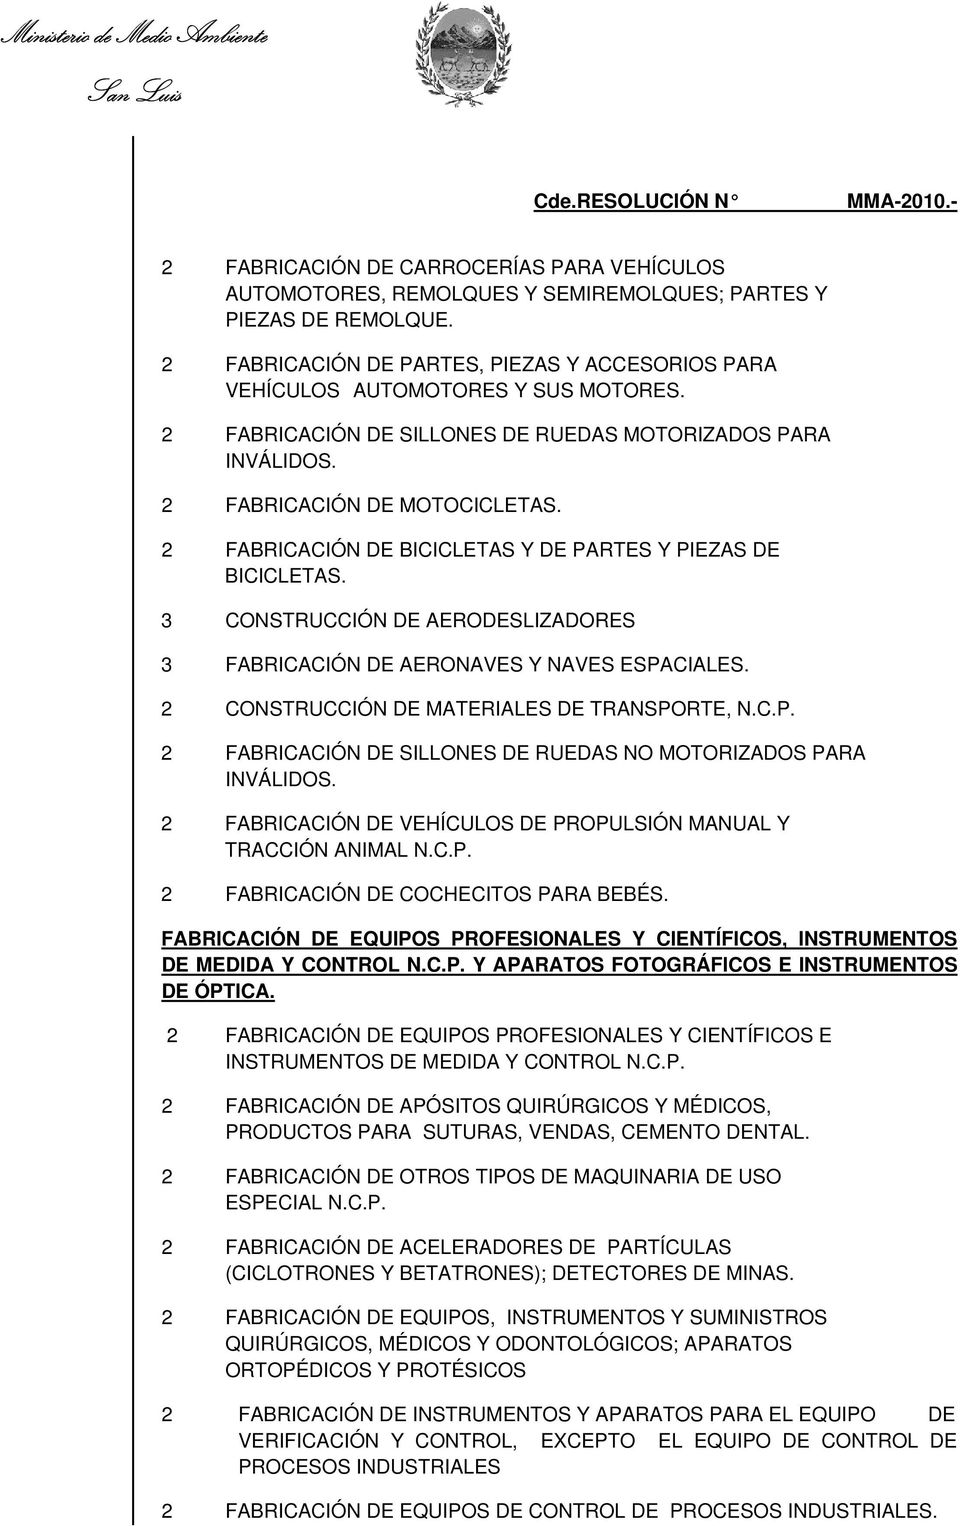 CONSTRUCCIÓN DE AERODESLIZADORES FABRICACIÓN DE AERONAVES Y NAVES ESPACIALES. CONSTRUCCIÓN DE MATERIALES DE TRANSPORTE, N.C.P. FABRICACIÓN DE SILLONES DE RUEDAS NO MOTORIZADOS PARA INVÁLIDOS.